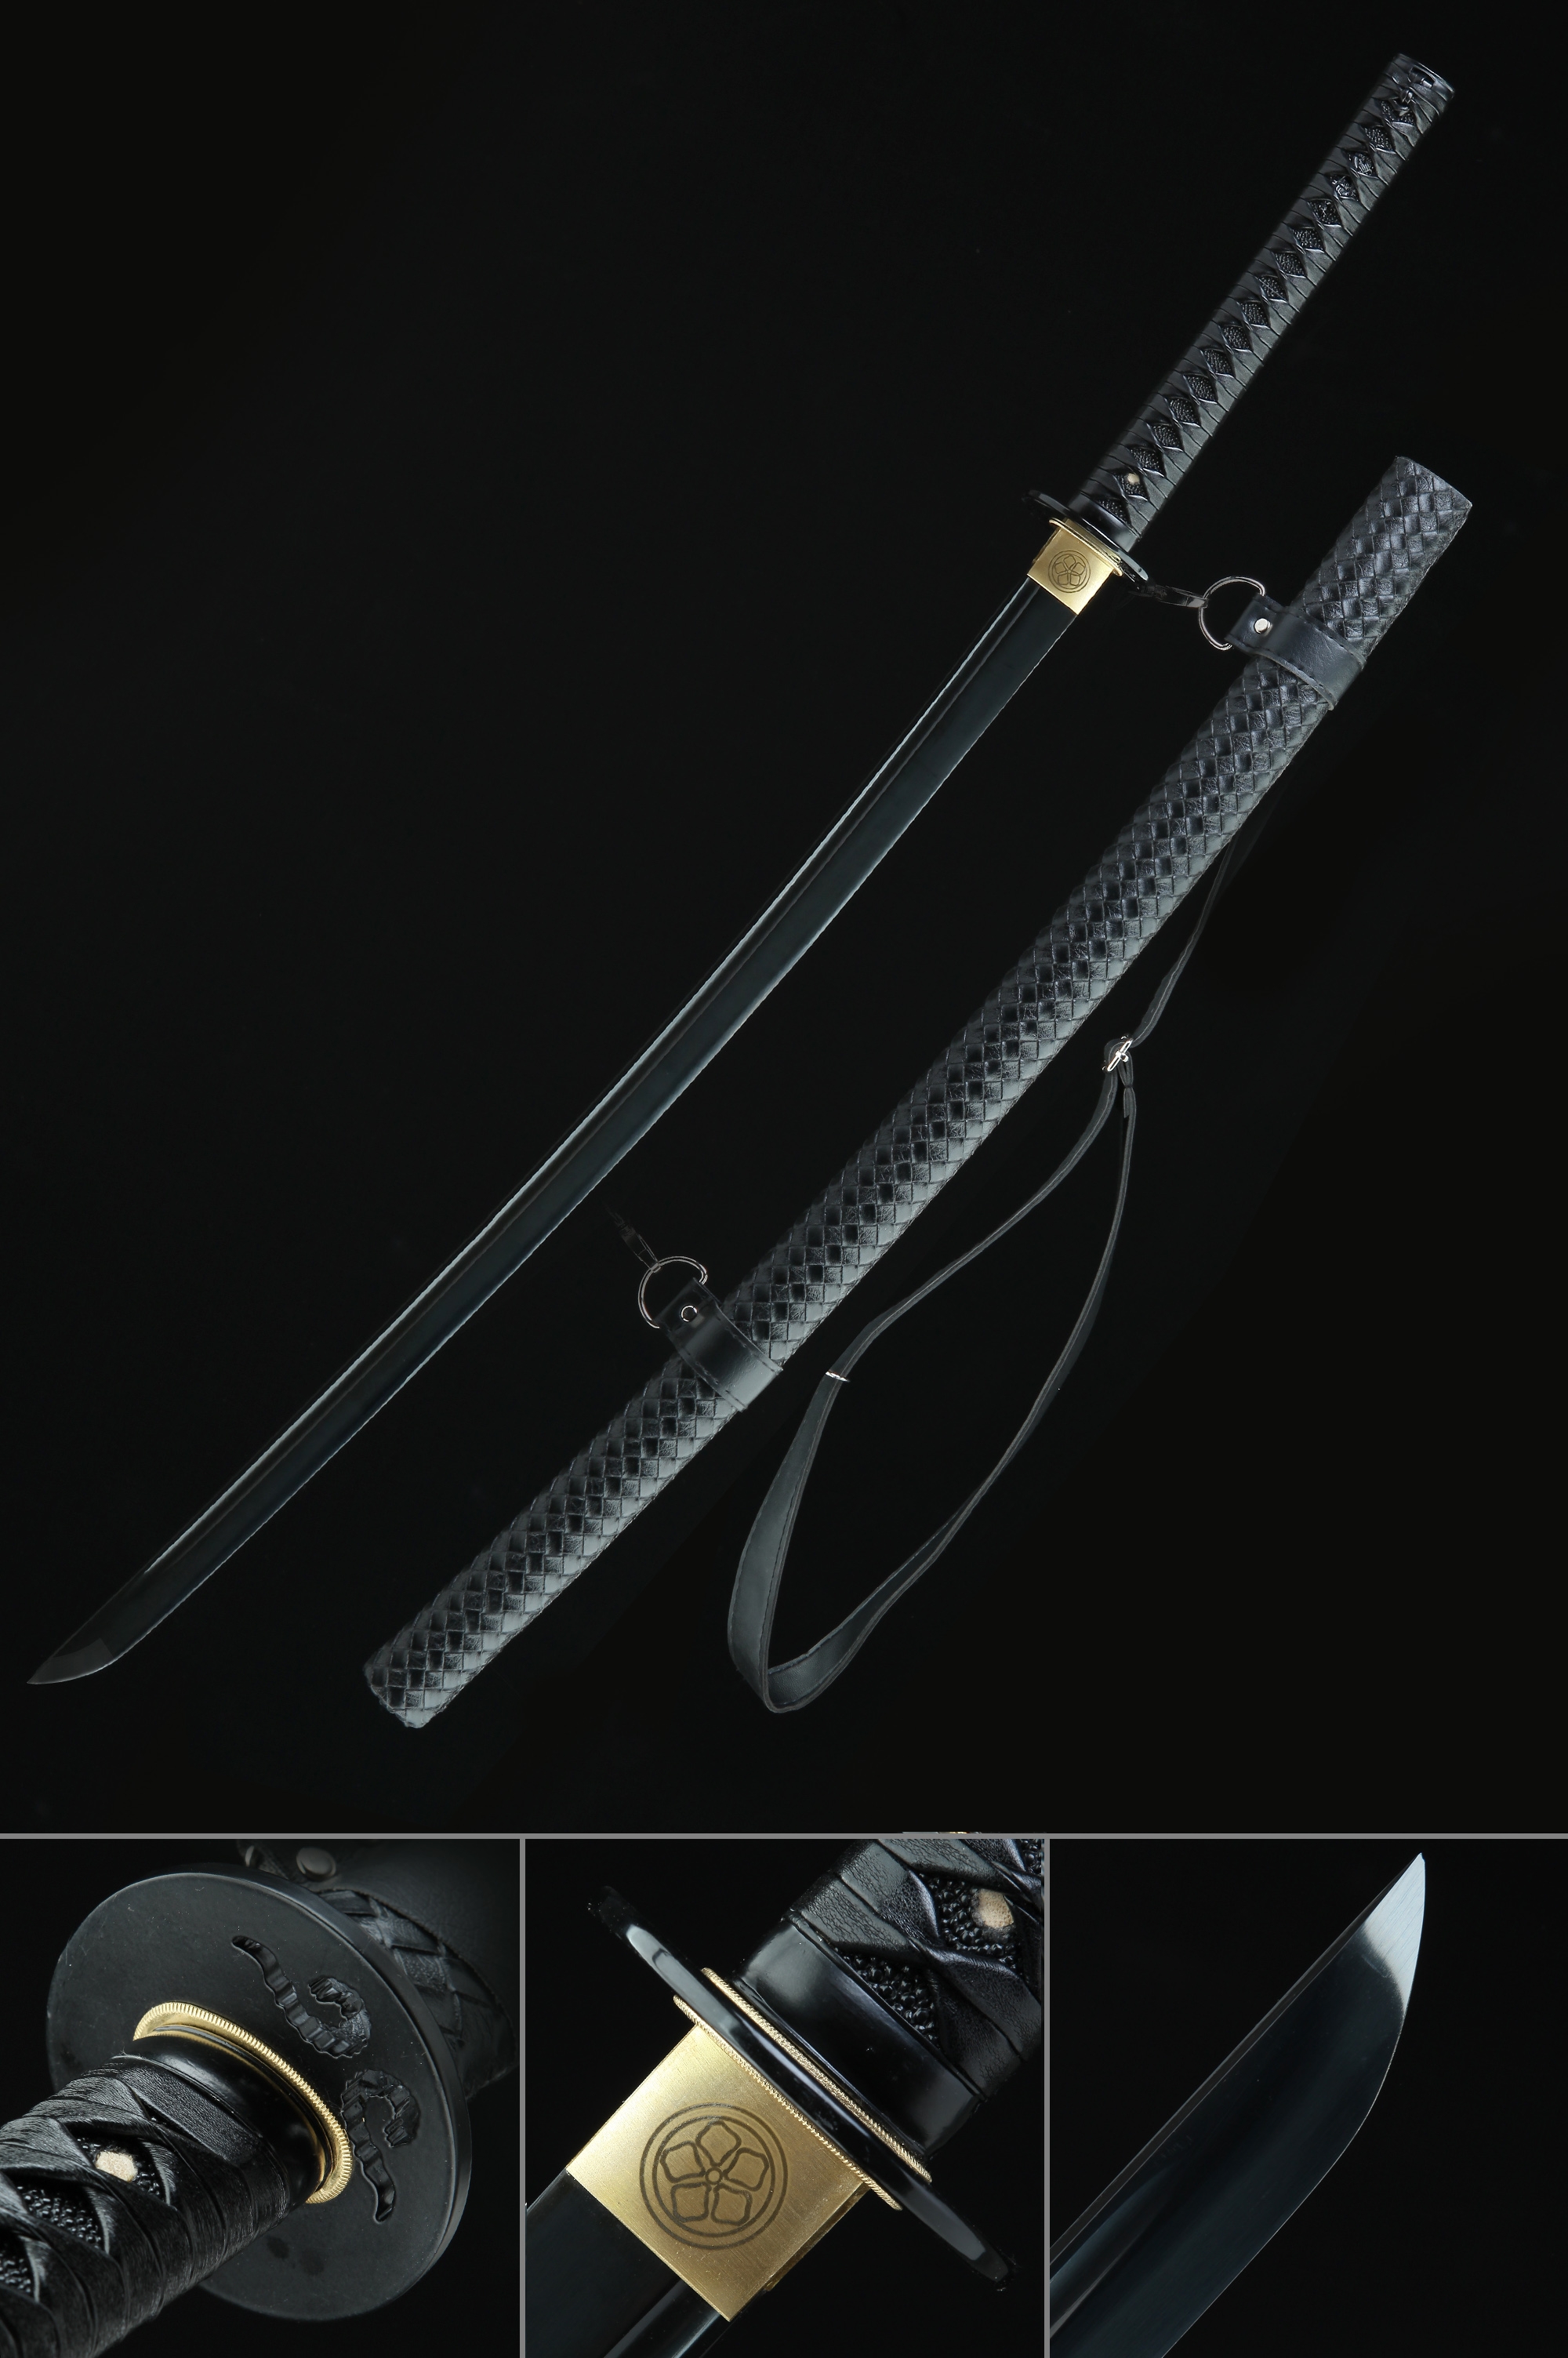 Handmade Japanese Katana Sword 1060 Carbon Steel With Black Blade And Strap